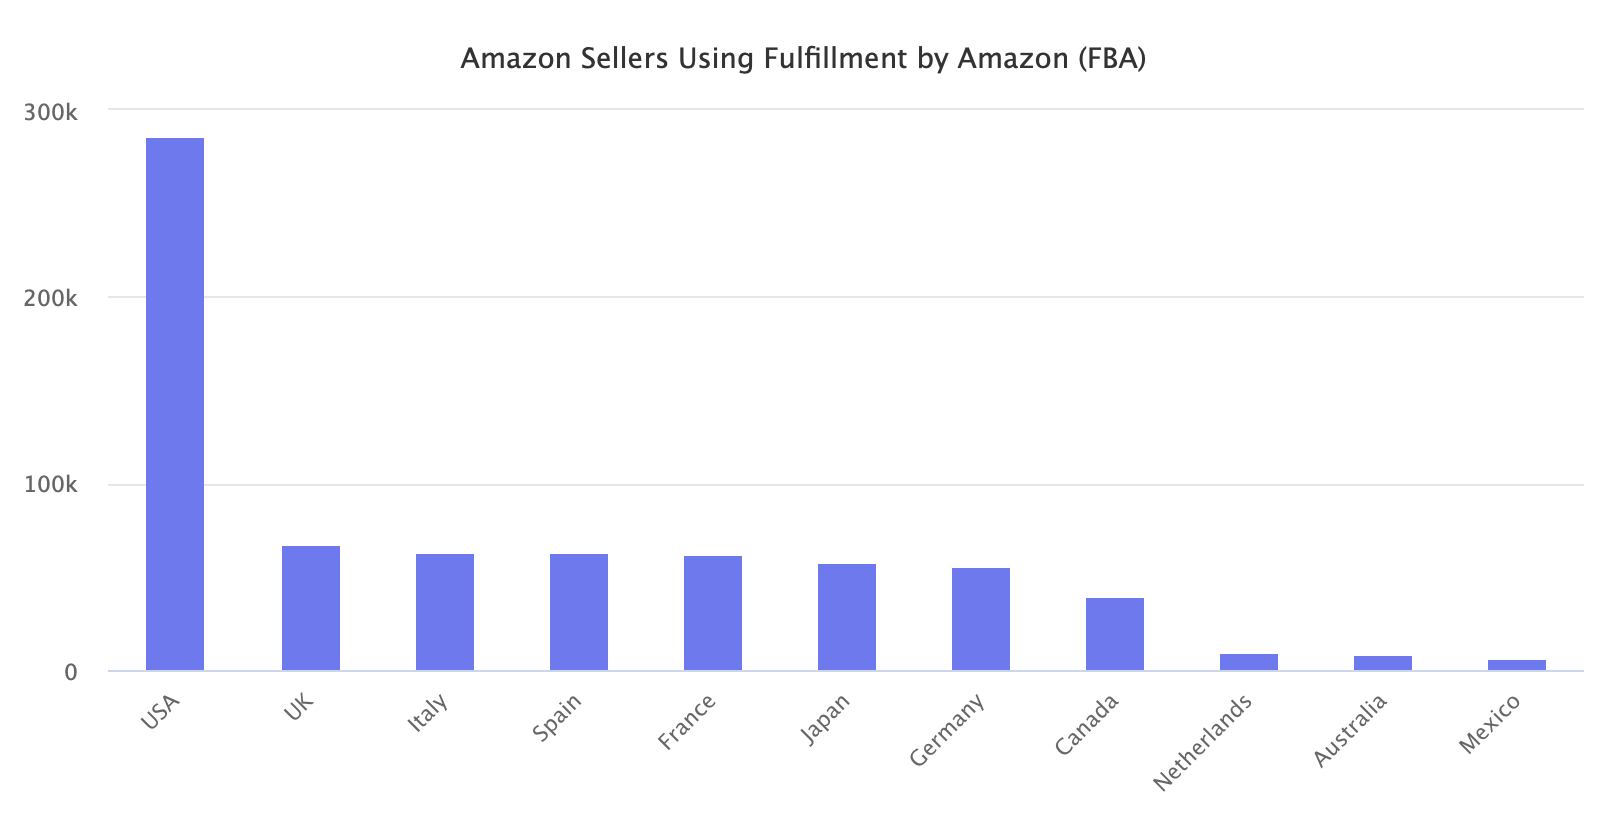 Amazon Sellers Using Fulfillment by Amazon (FBA)